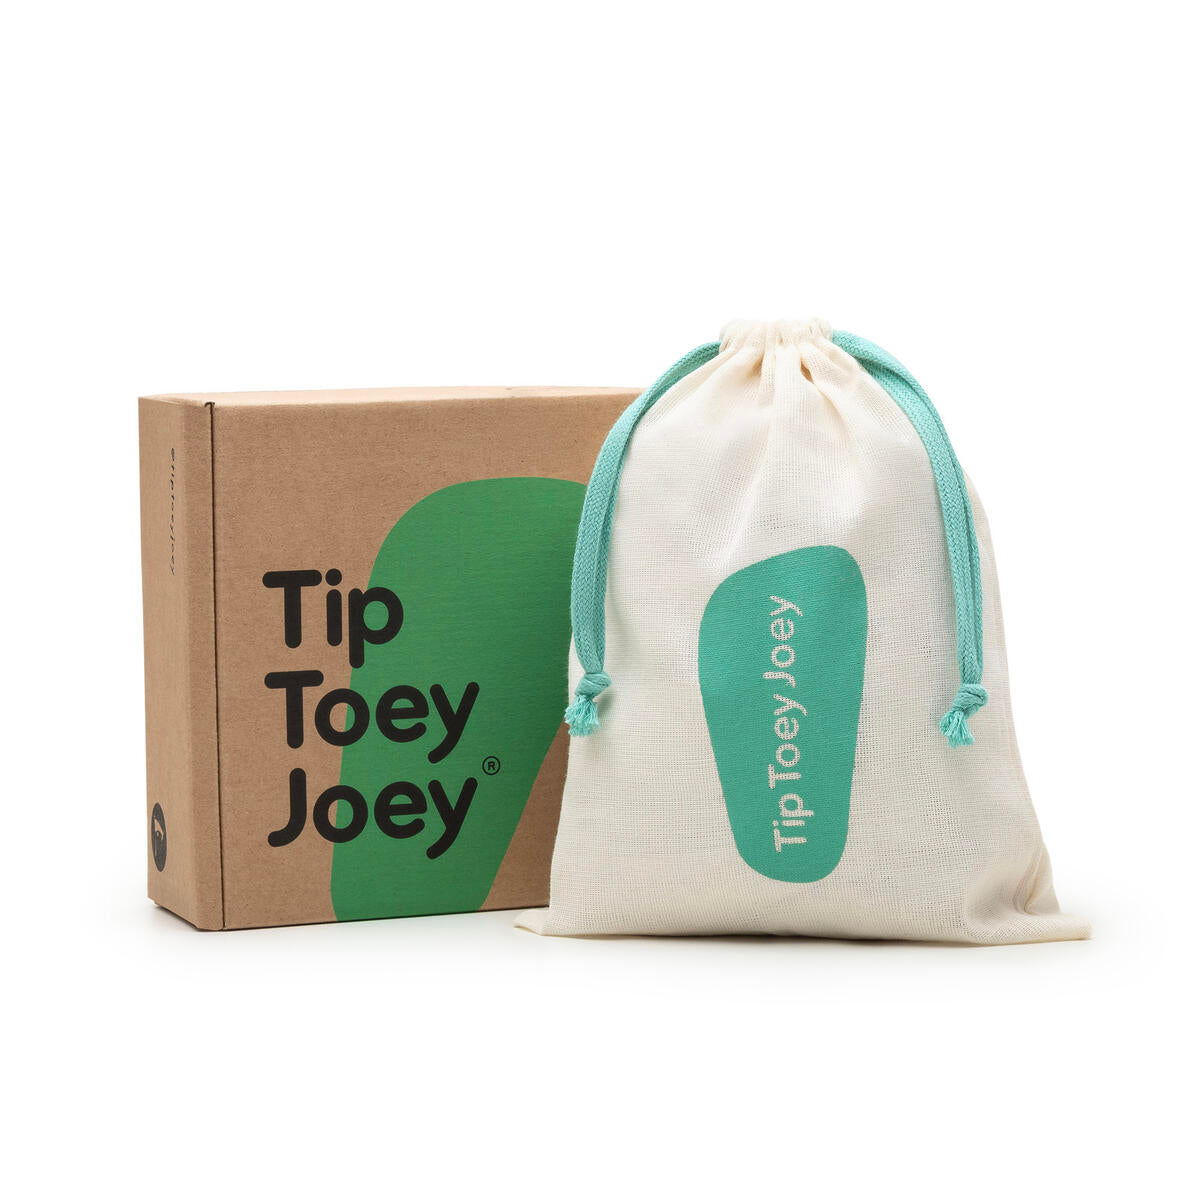 Tip Toey Joey - Ténis Bossy Colors Papaya